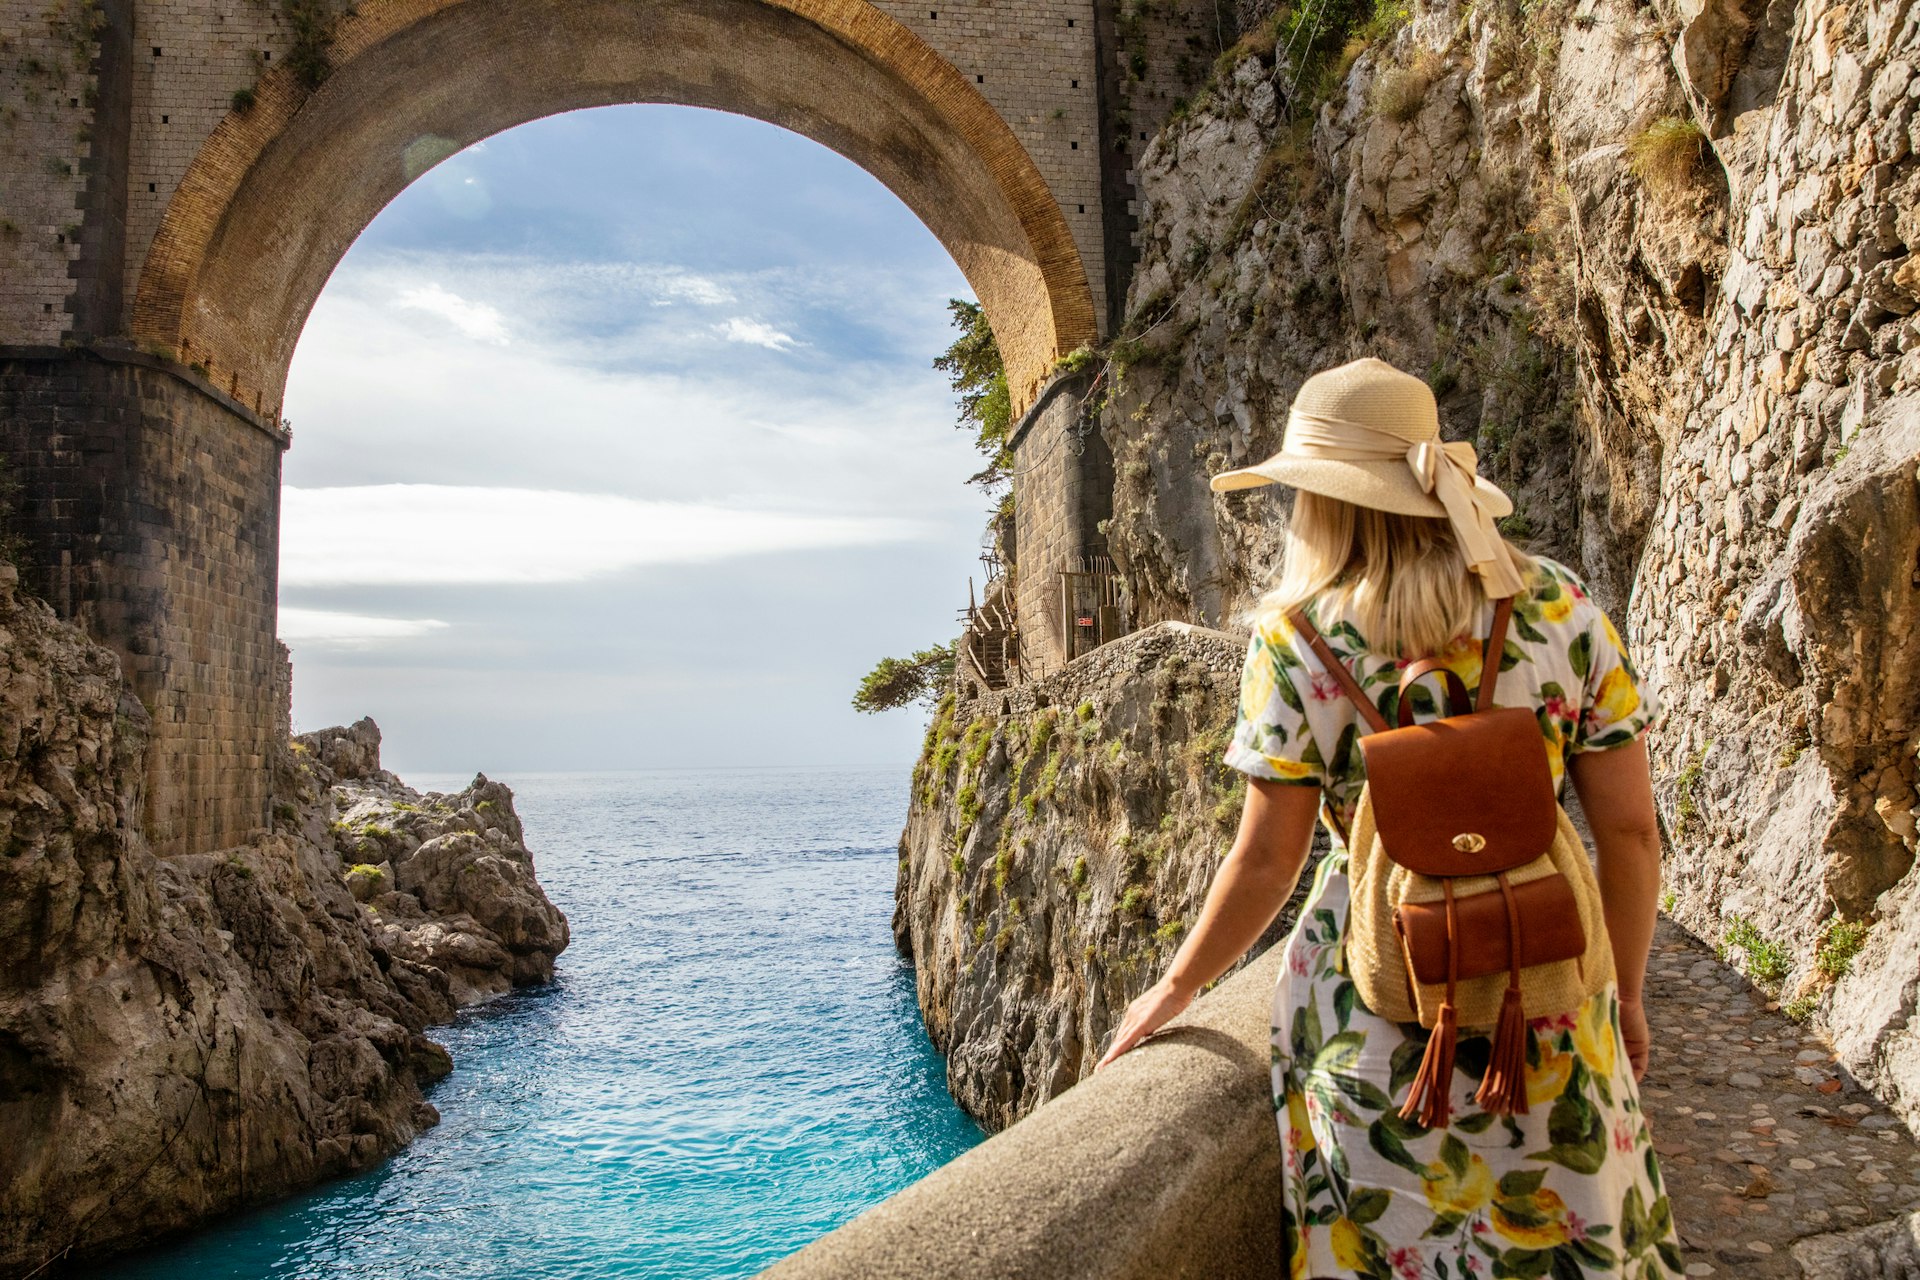 A woman walking along a path beneath the Fiordo di Furore bridge on the Amalfi Coast